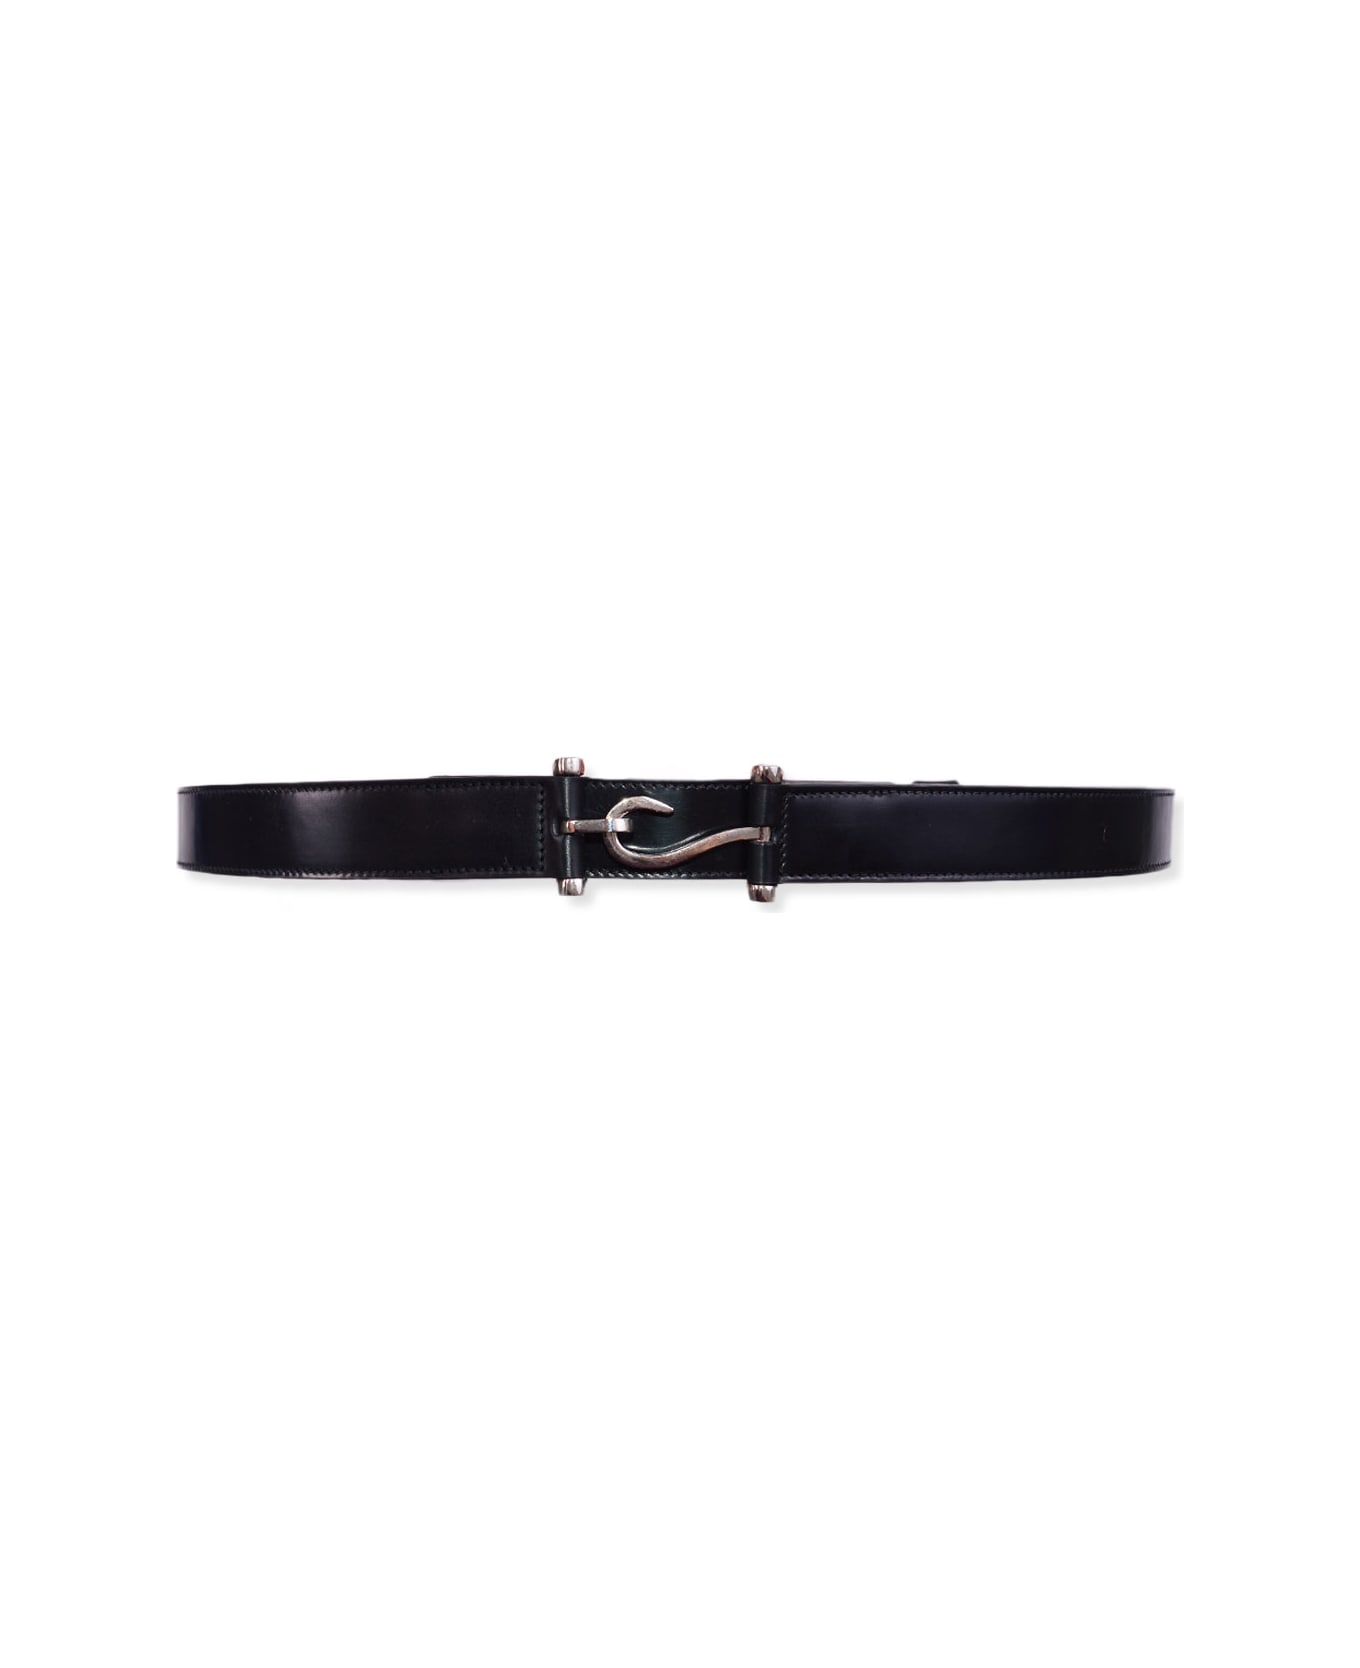 Edhen Milano Belt - Black